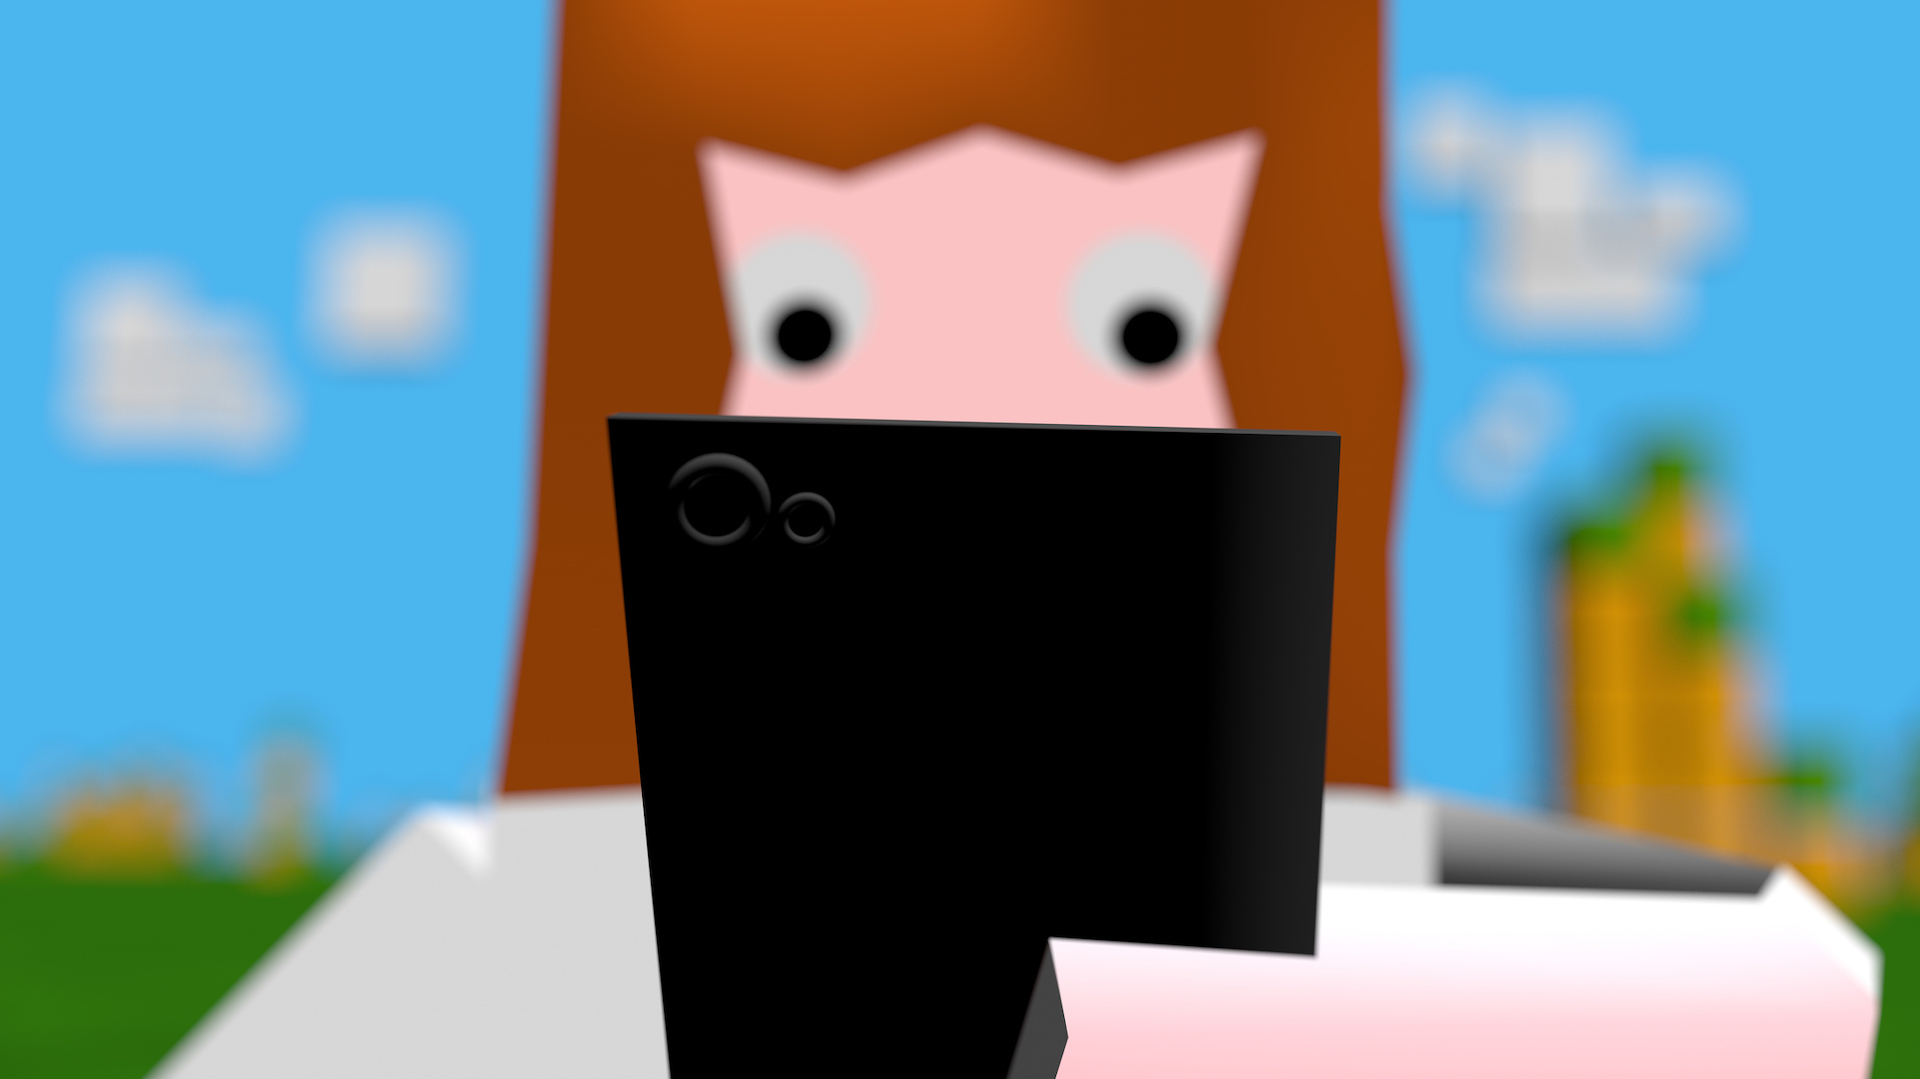 A video game avatar